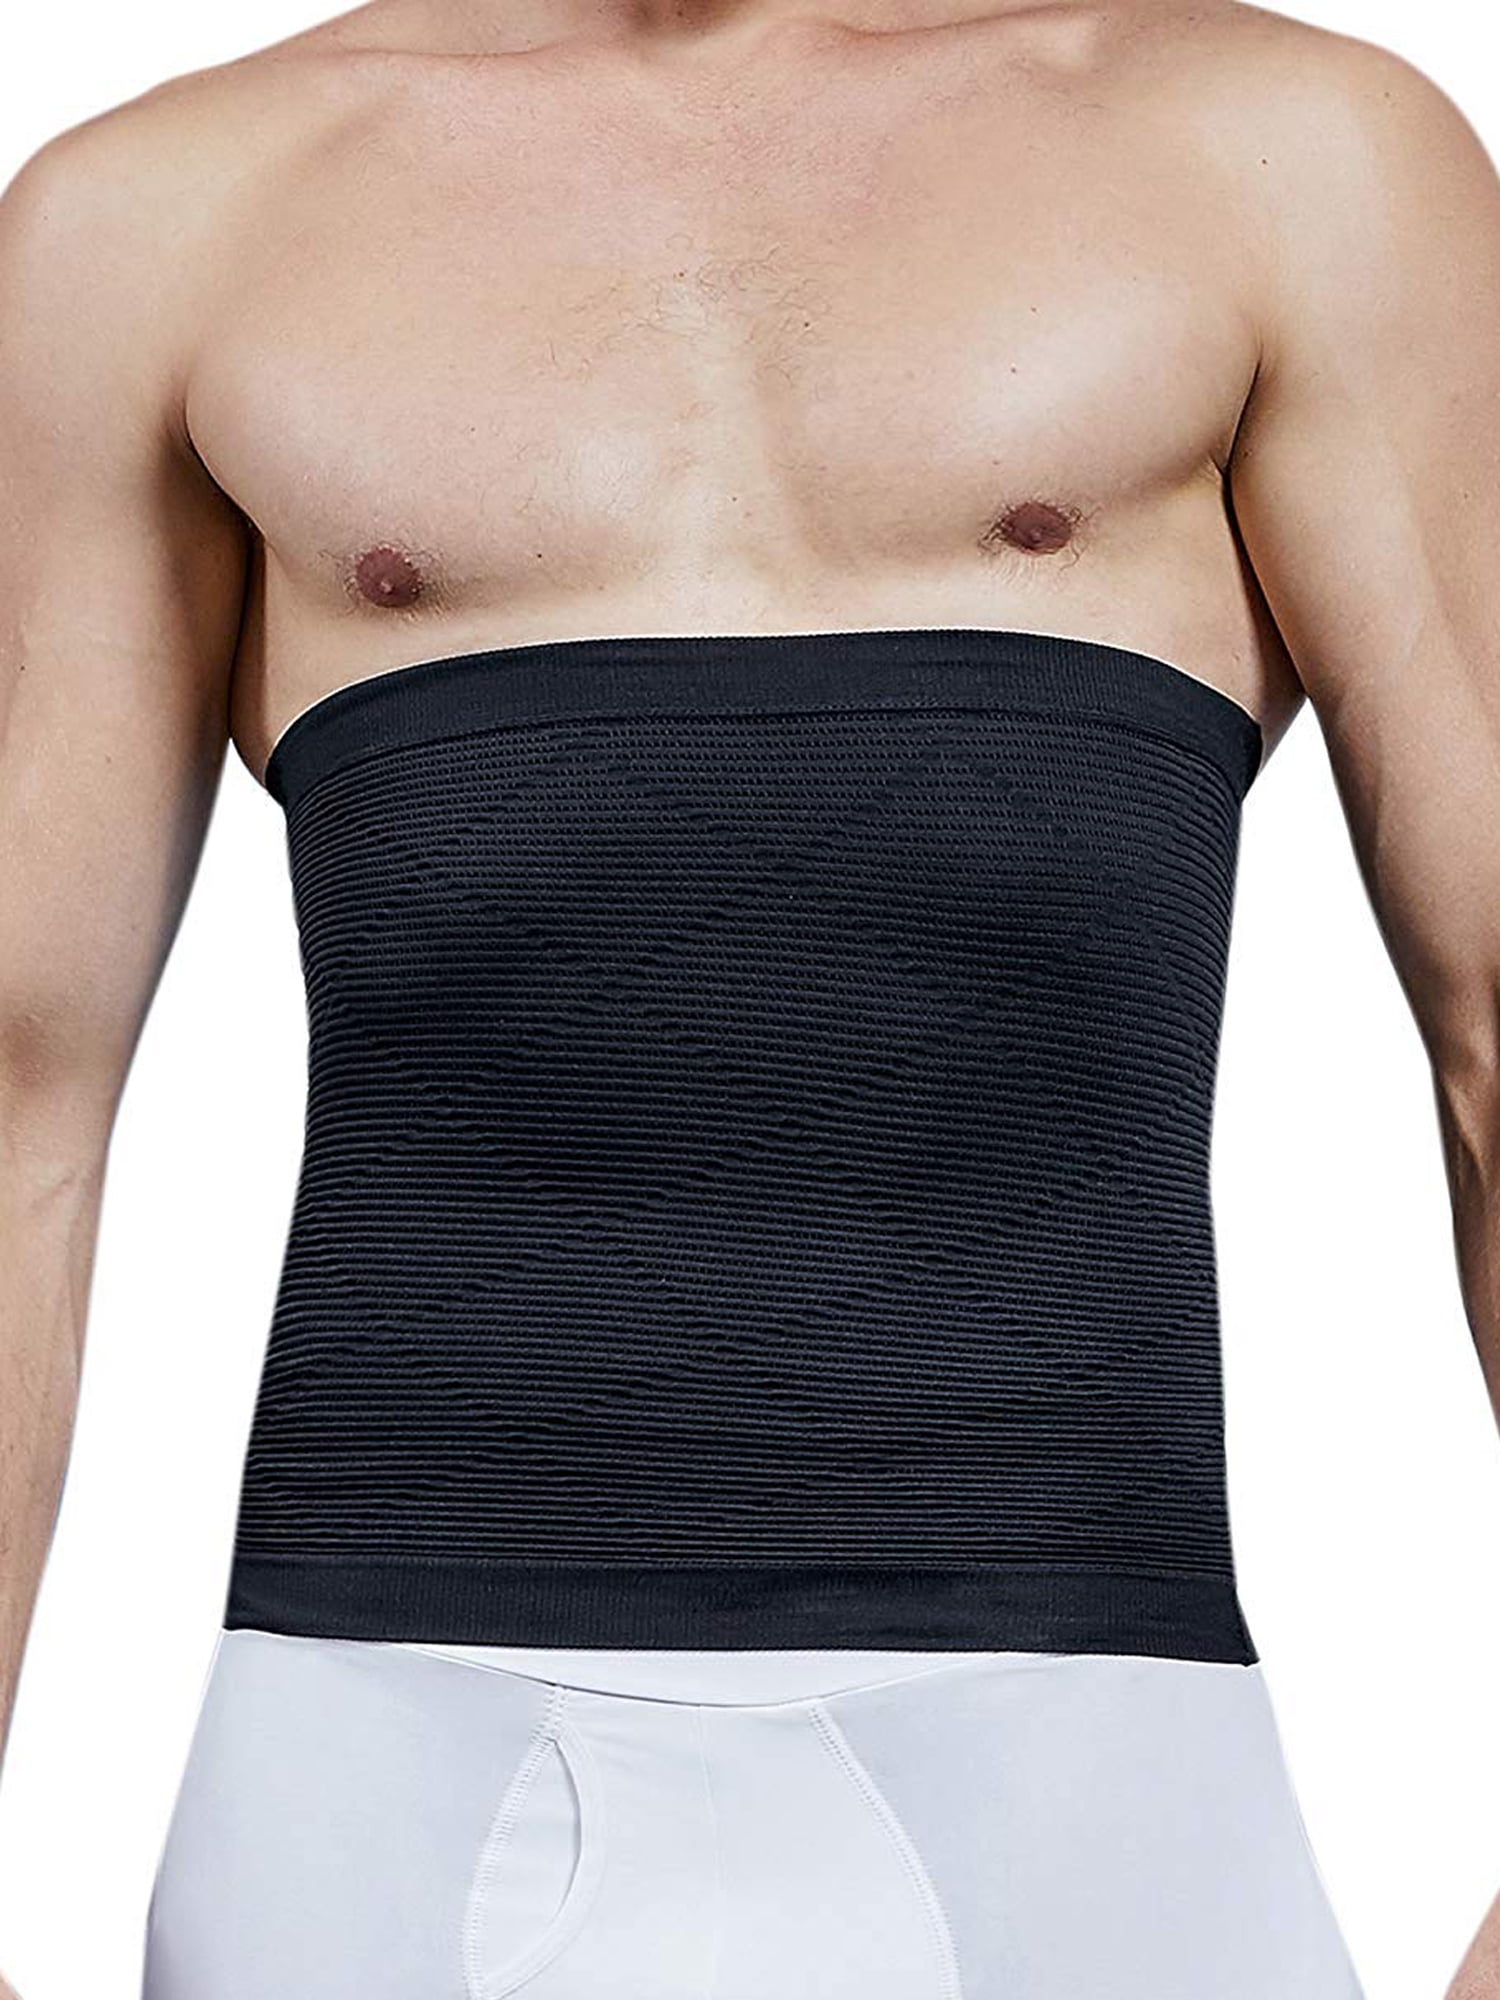 SLIMBELLE Men Firm Tummy Control Shapewear Compression Waist